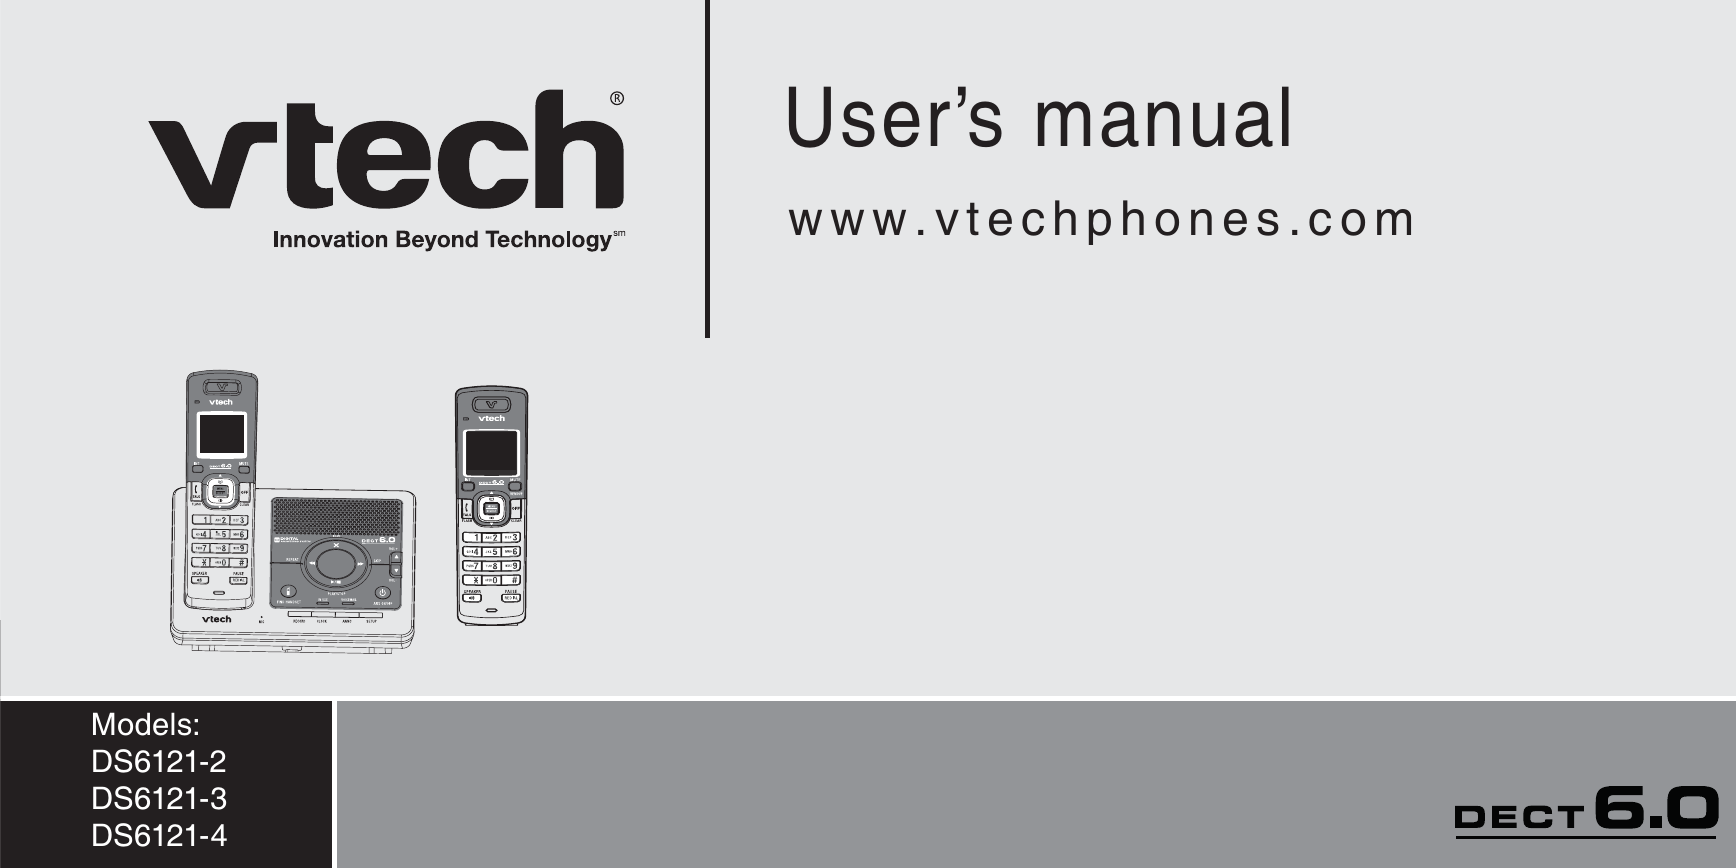 User’s manualwww.vtechphones.comModels: DS6121-2DS6121-3DS6121-4